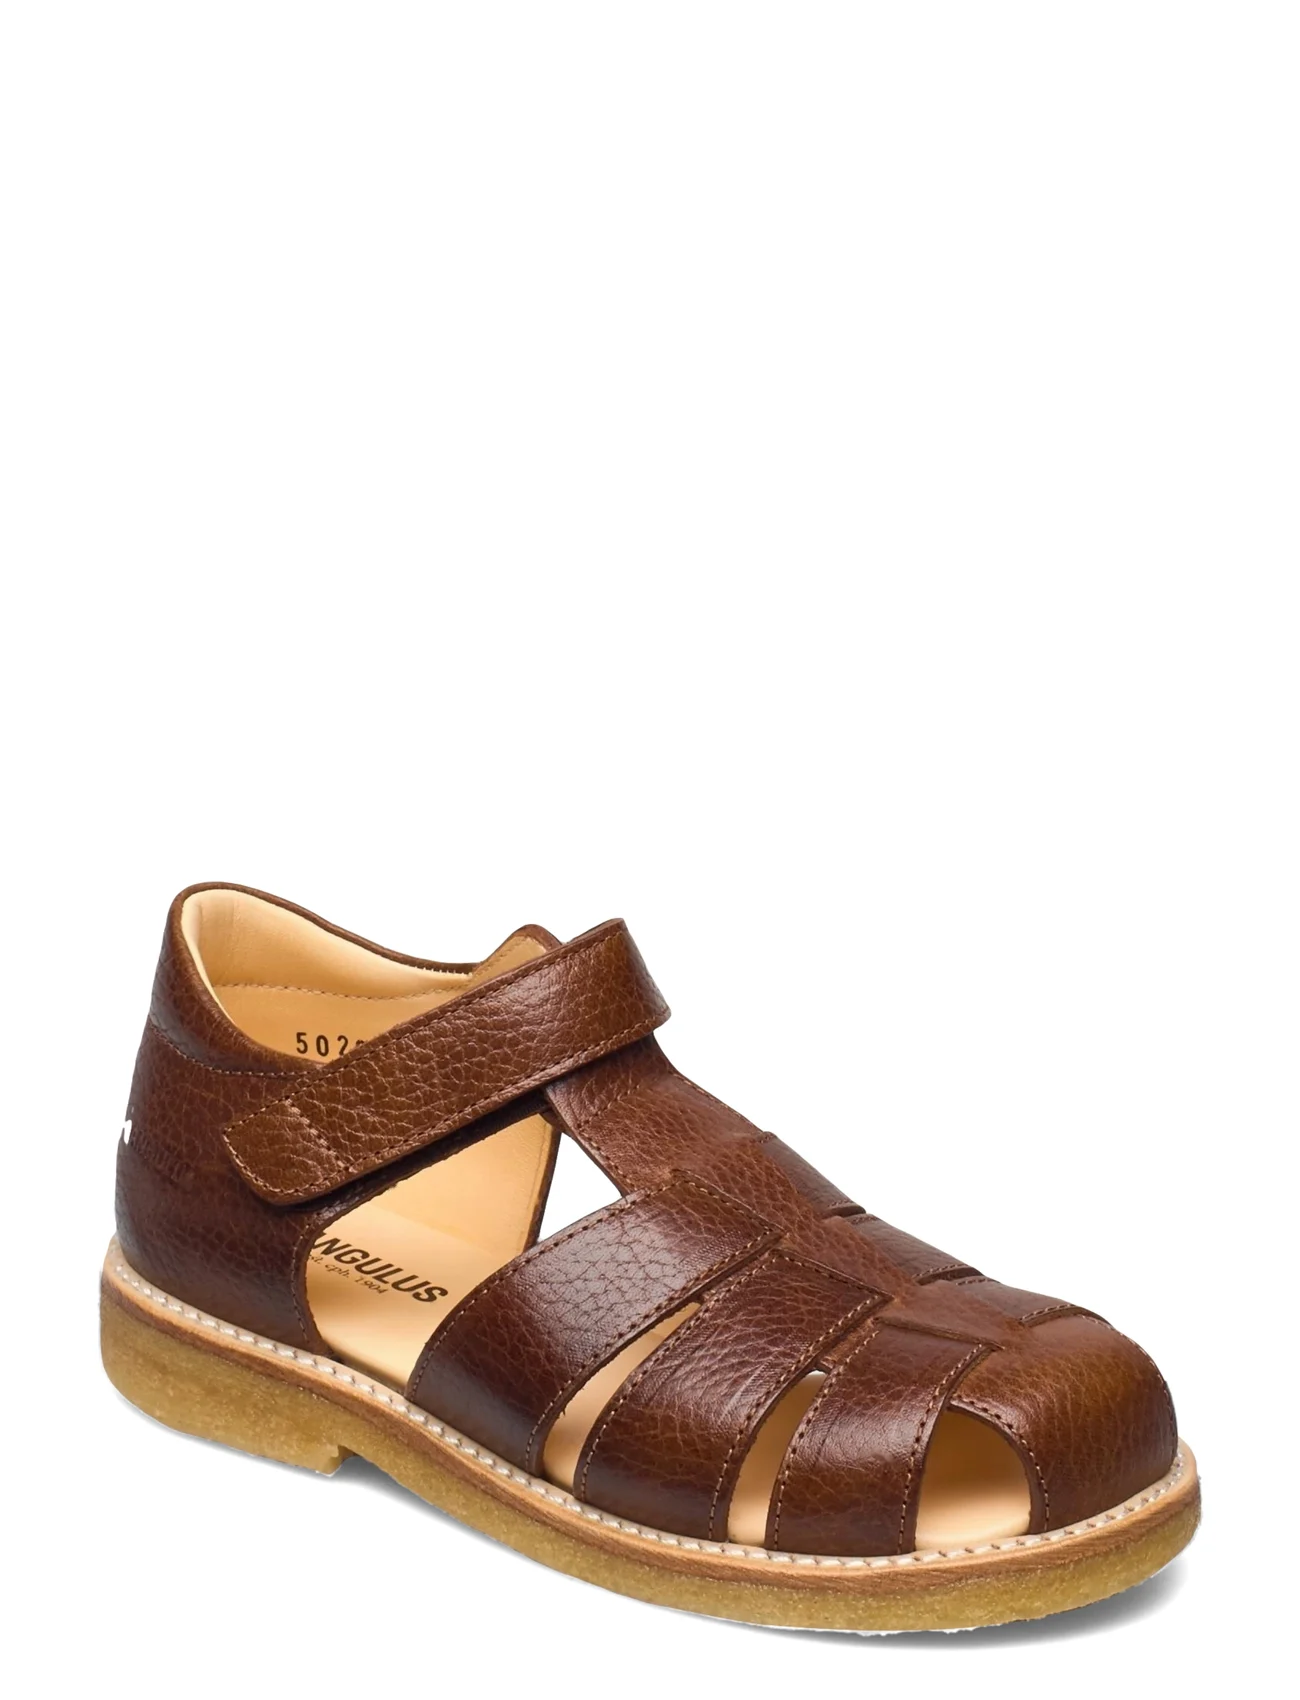 ANGULUS - Sandals - flat - closed toe -  - sandals - 2509 cognac - 1